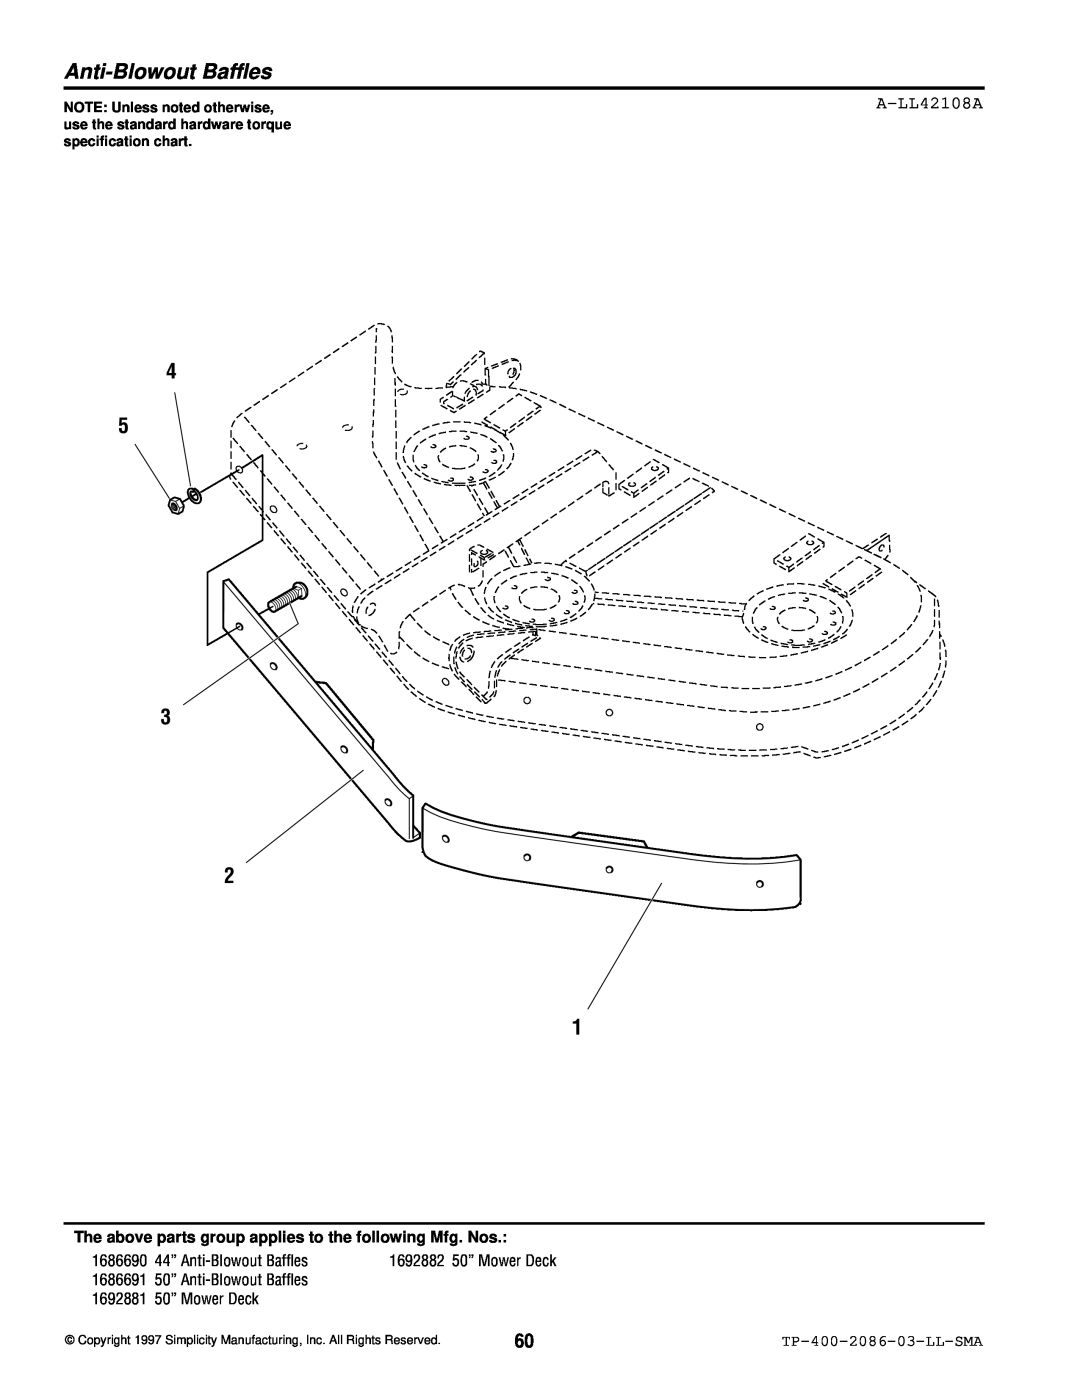 Simplicity 2700, 1700 manual Anti-BlowoutBaffles, A-LL42108A, TP-400-2086-03-LL-SMA, 1692882 50” Mower Deck 